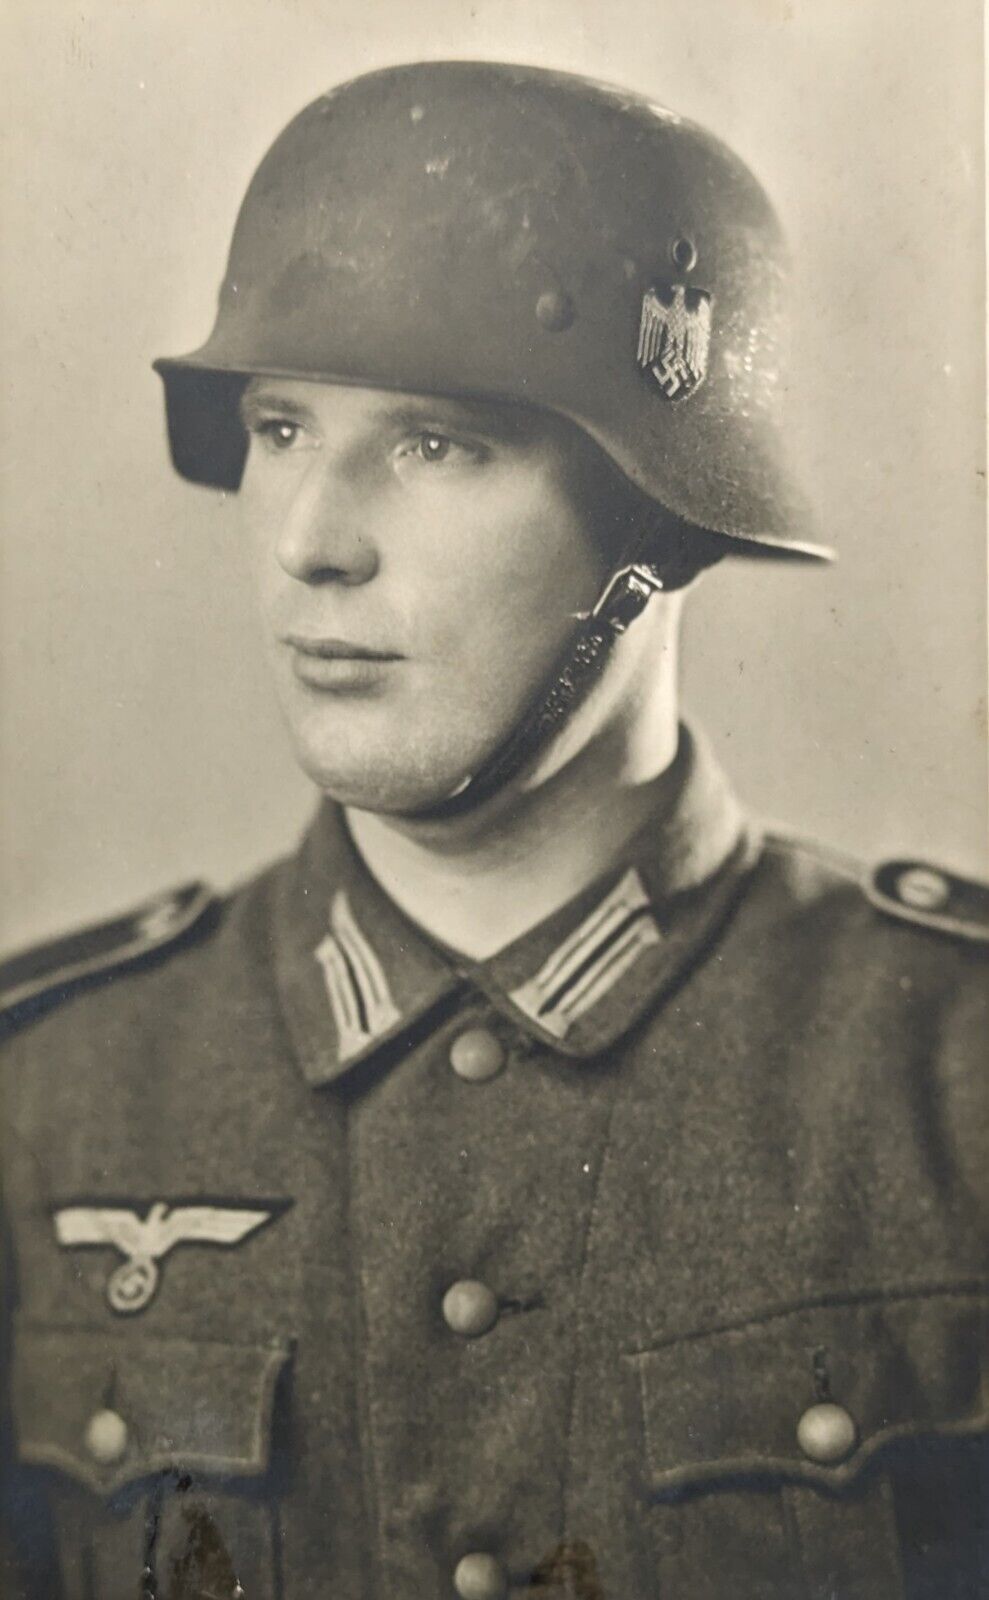 Postcard Real Photo World War II WW2 German Soldier 1940